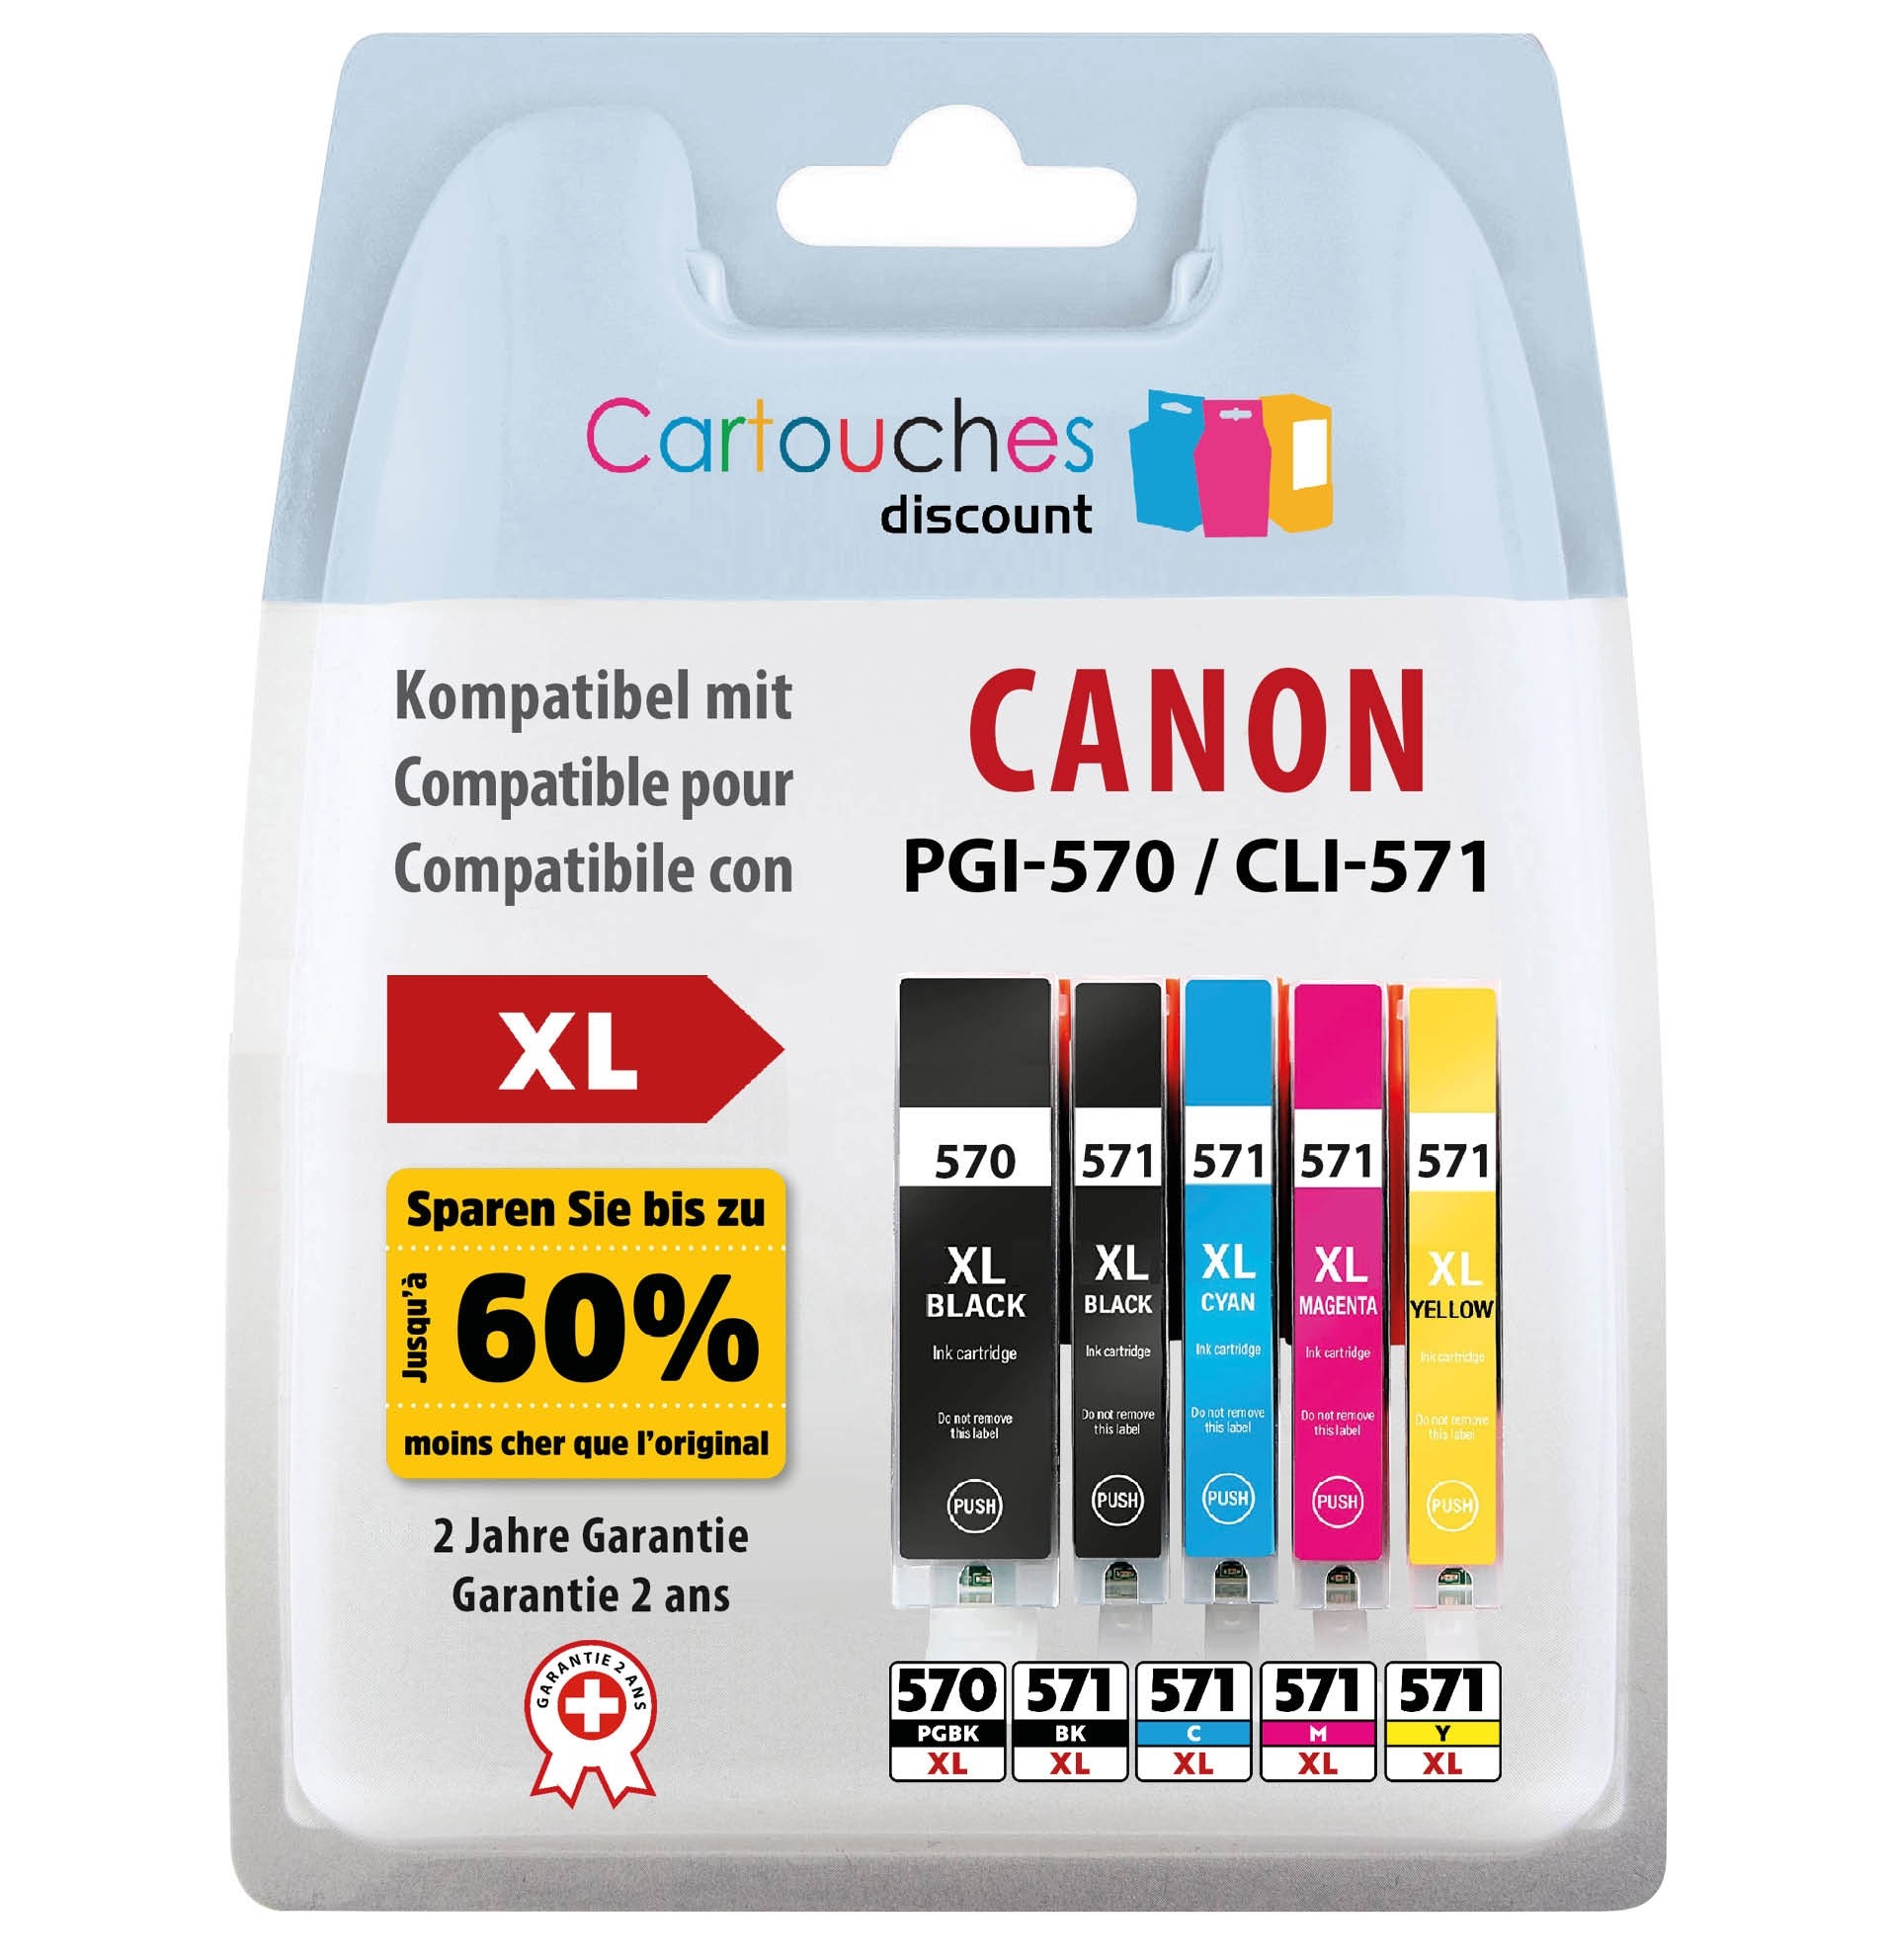 Cartouches compatibles Canon 570 - 571 XL PACK - 5 cartouches